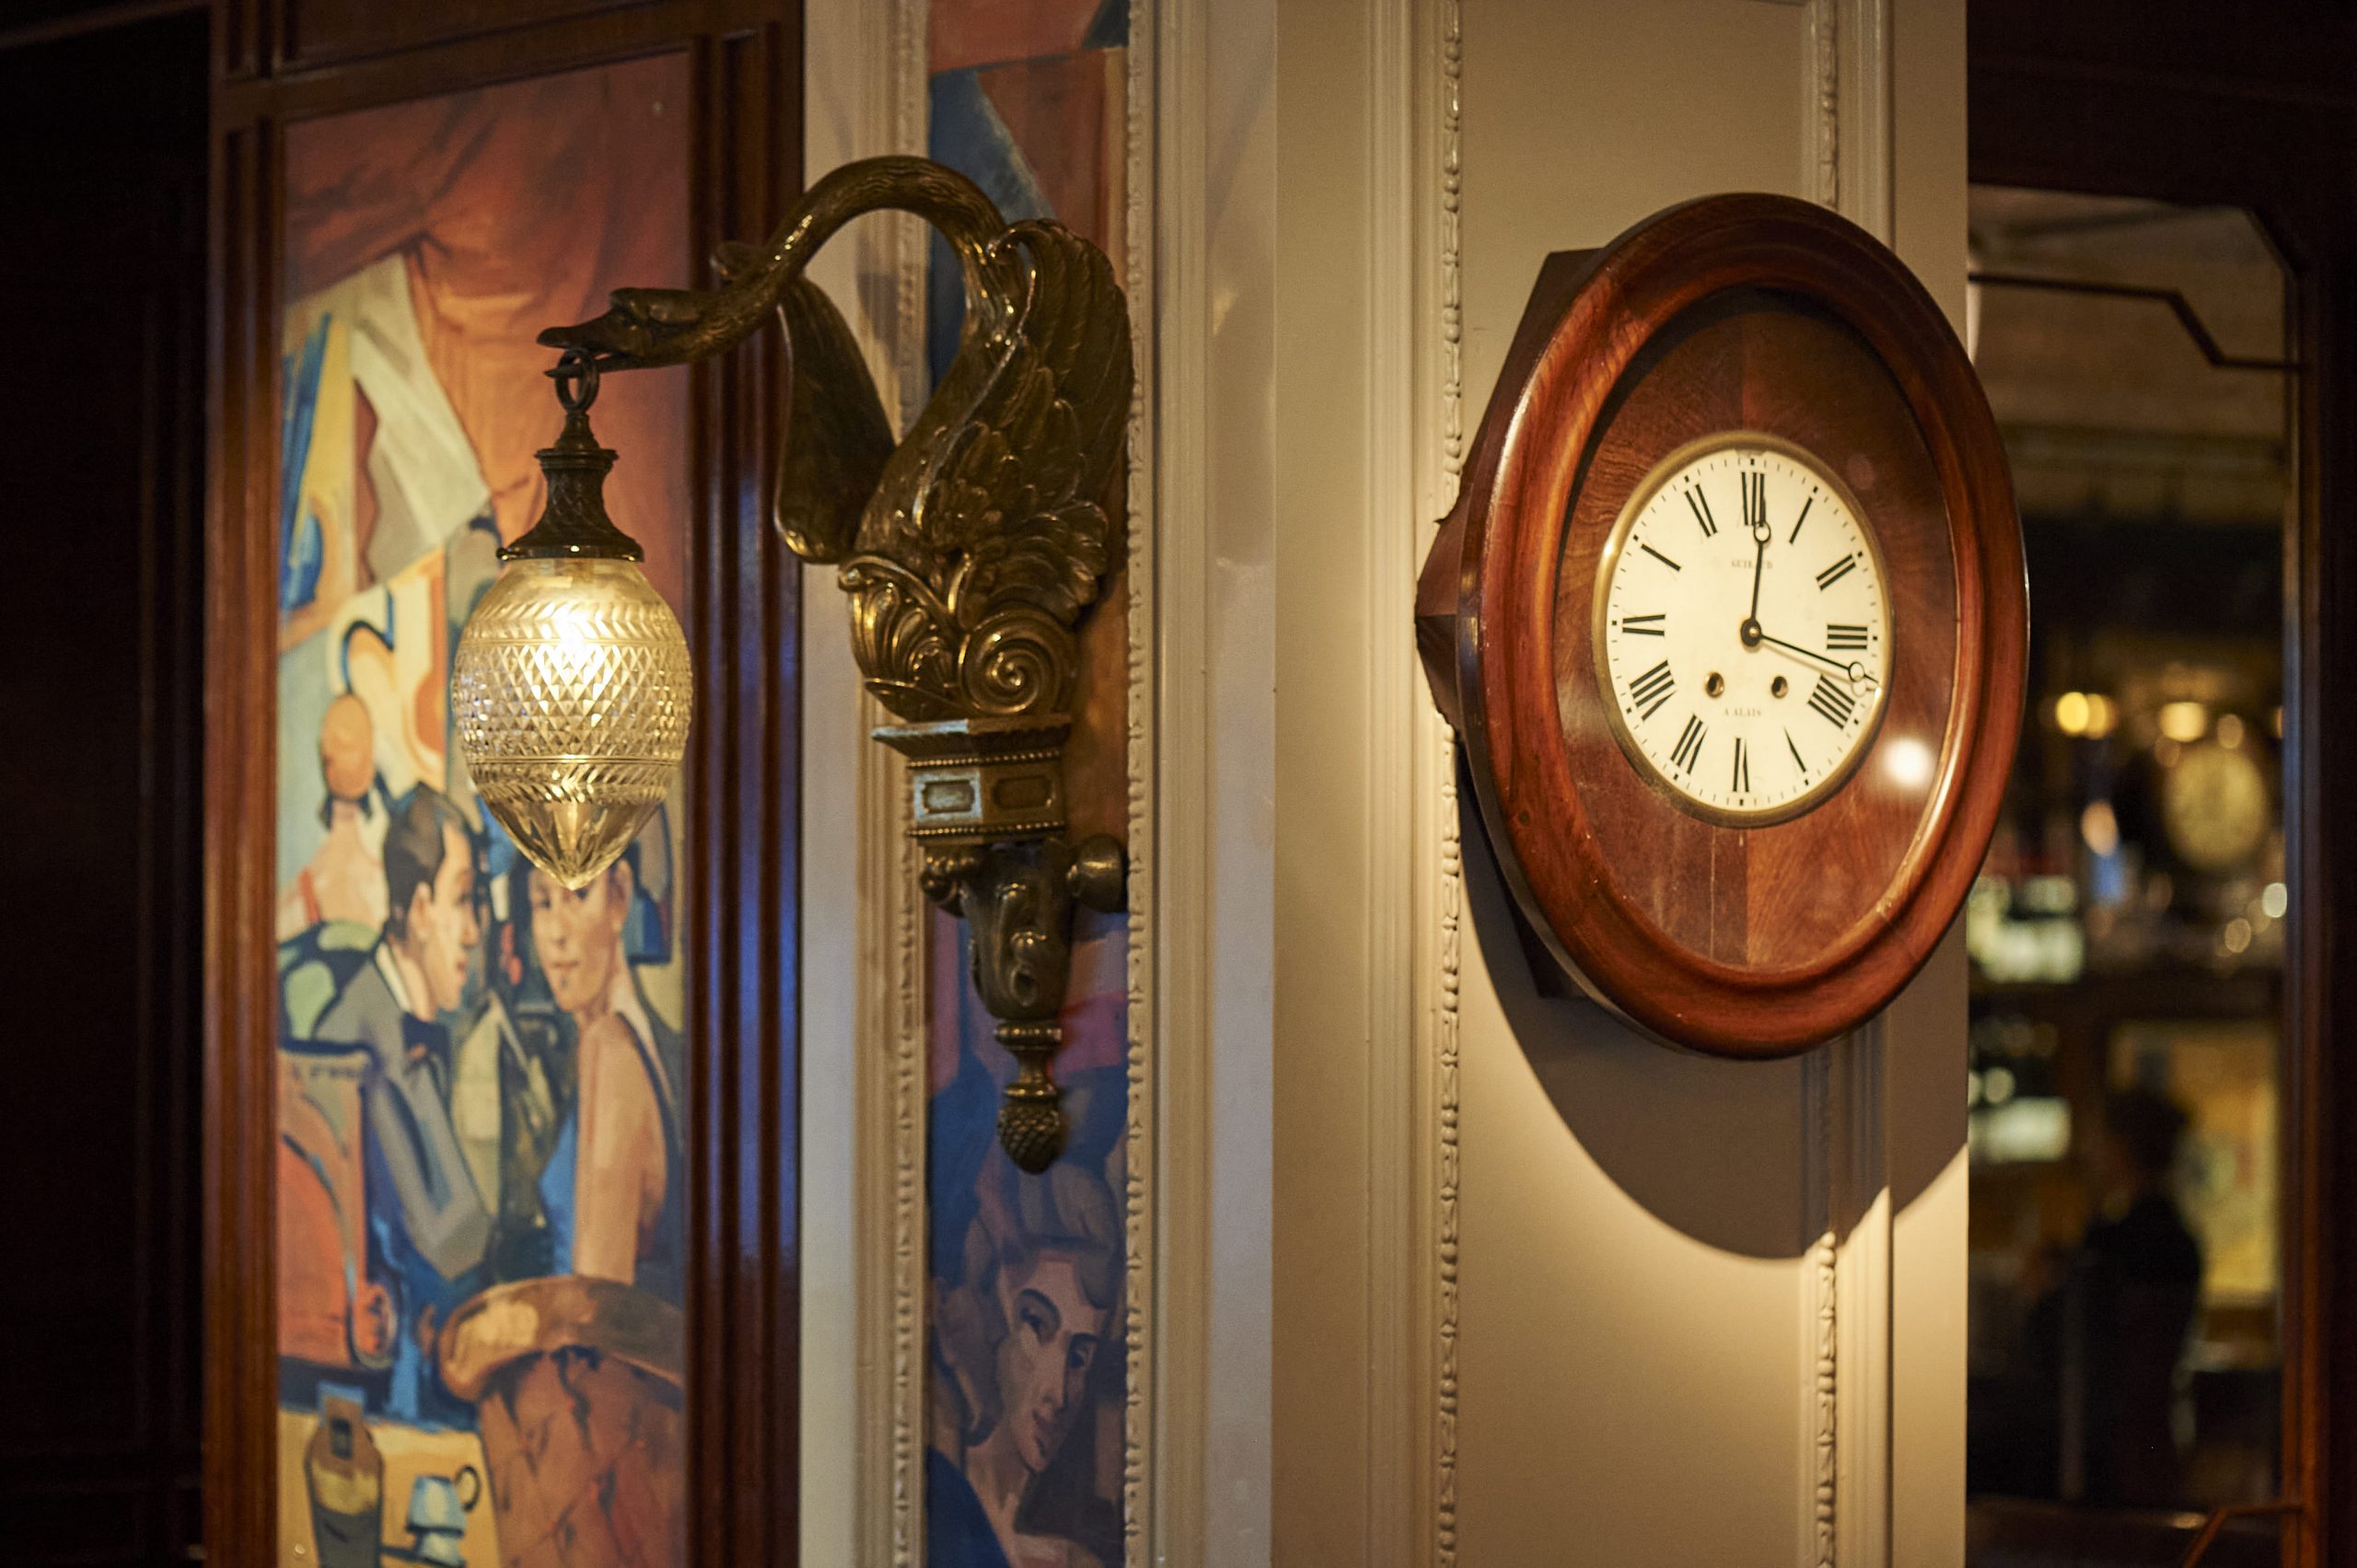 Bellanger clock and wall light detailing